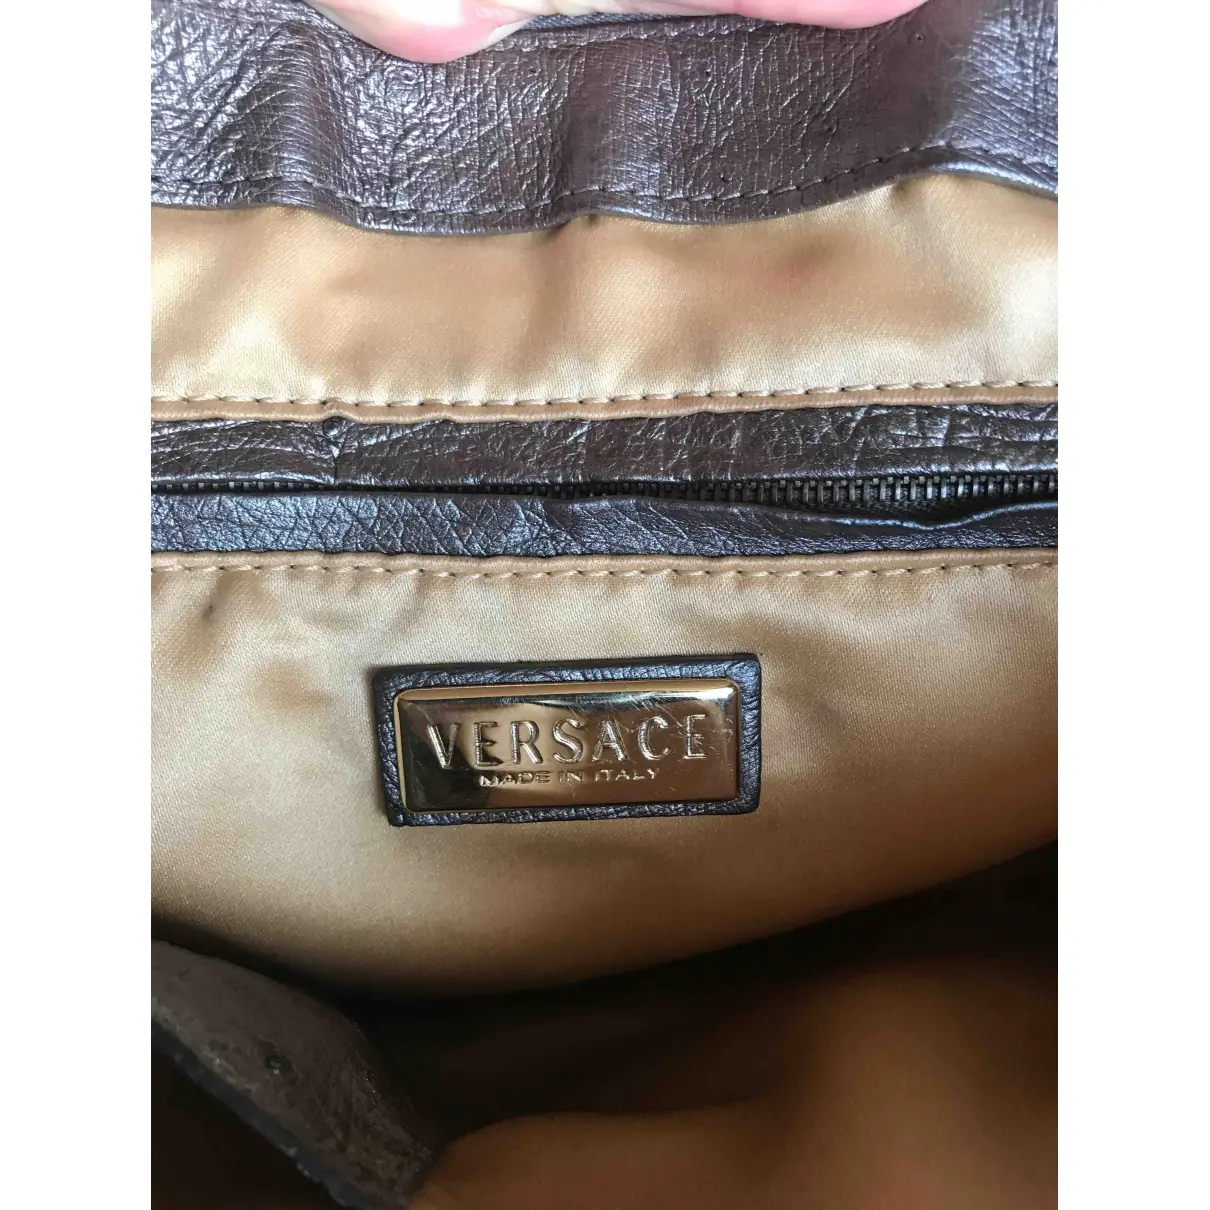 Leather handbag Gianni Versace